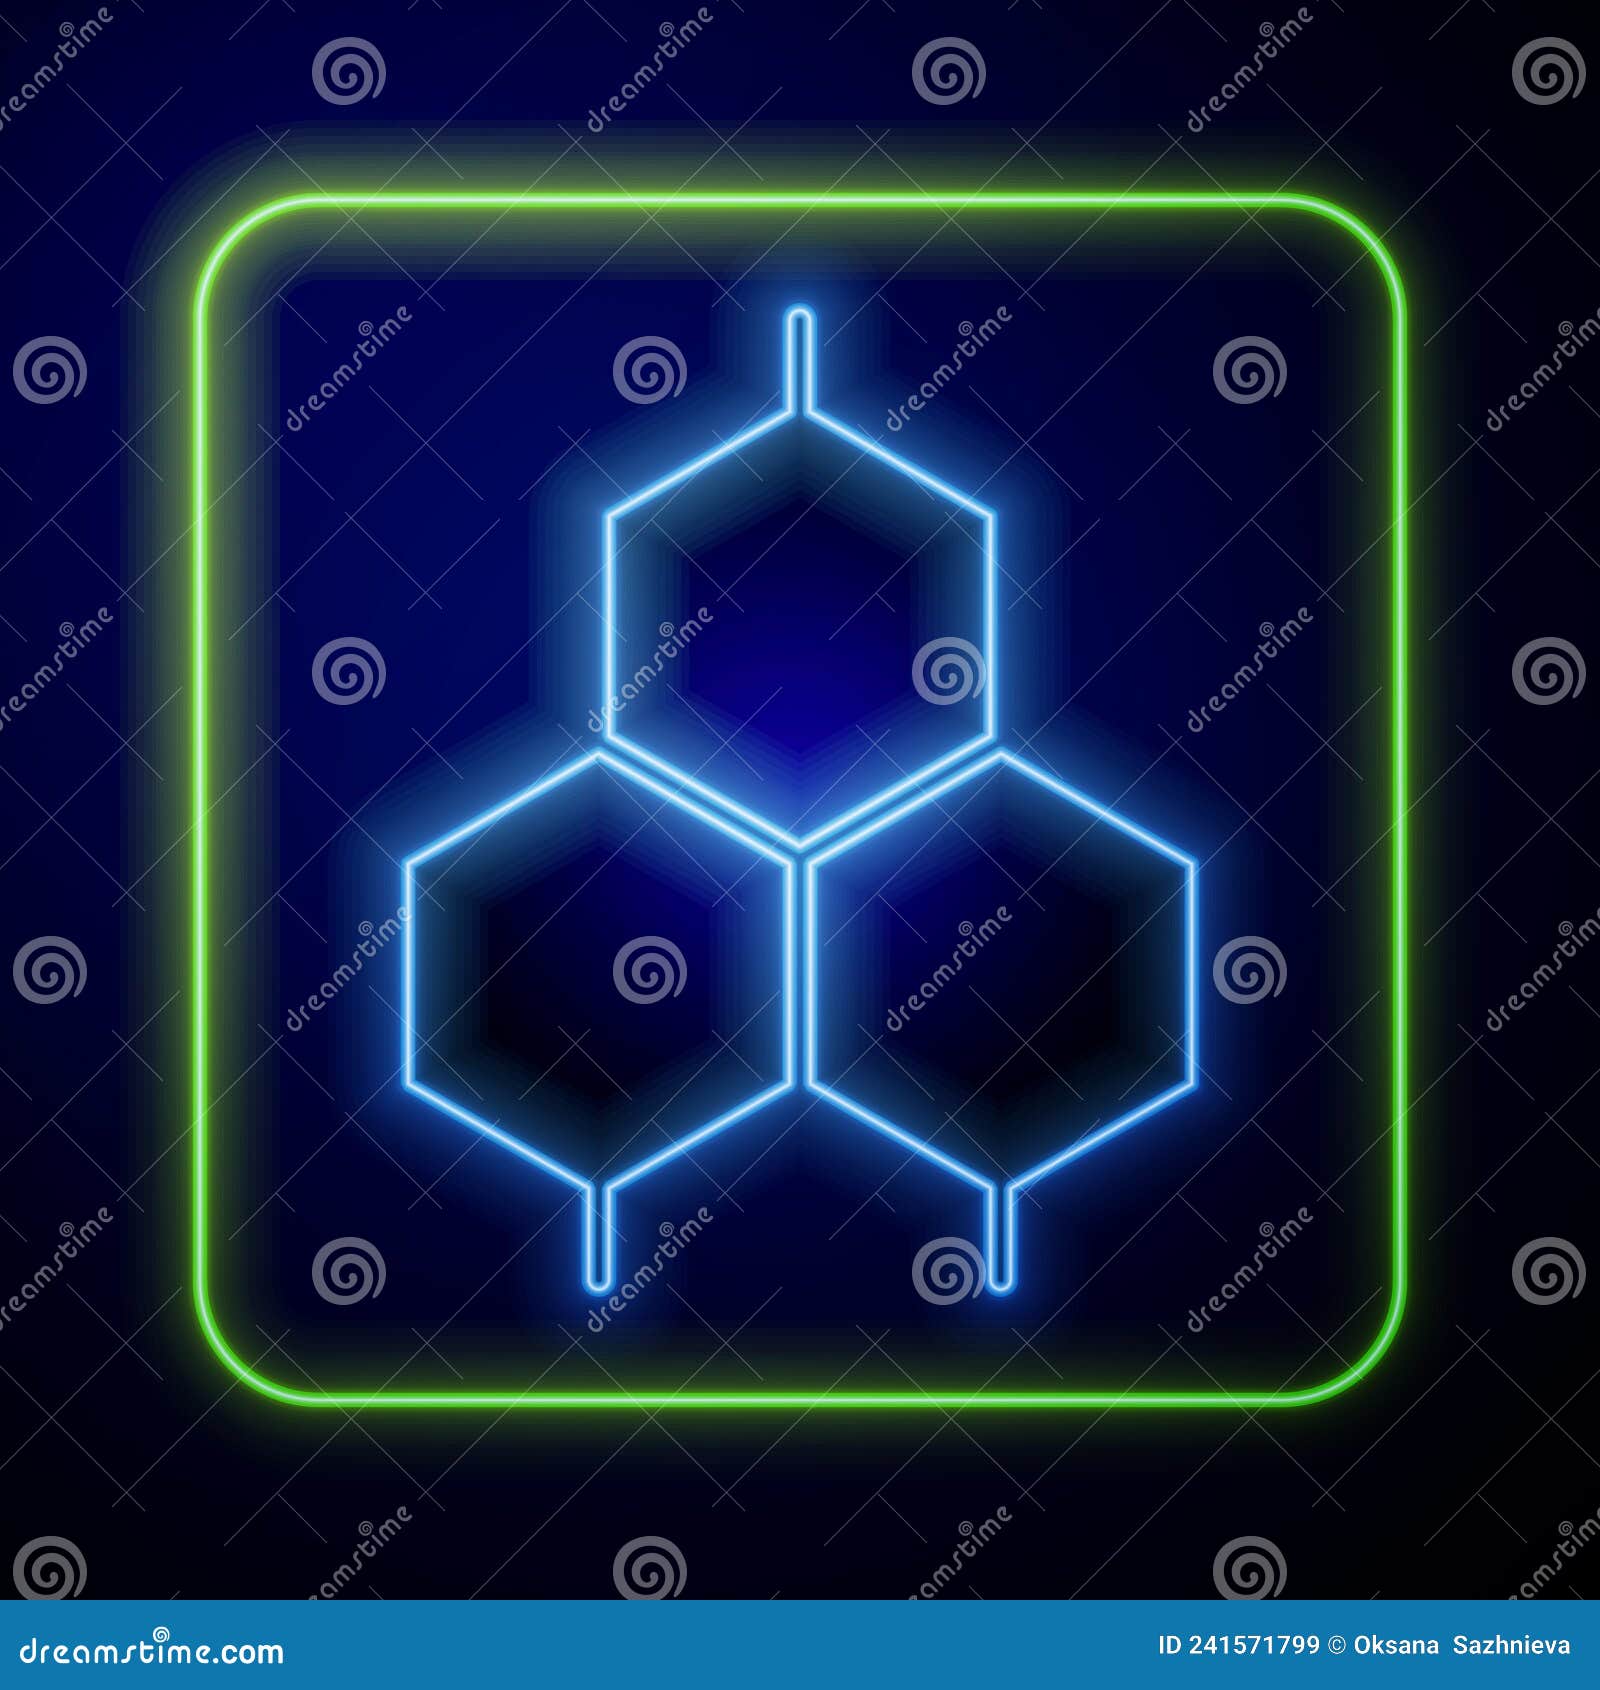 neon chemical symbol